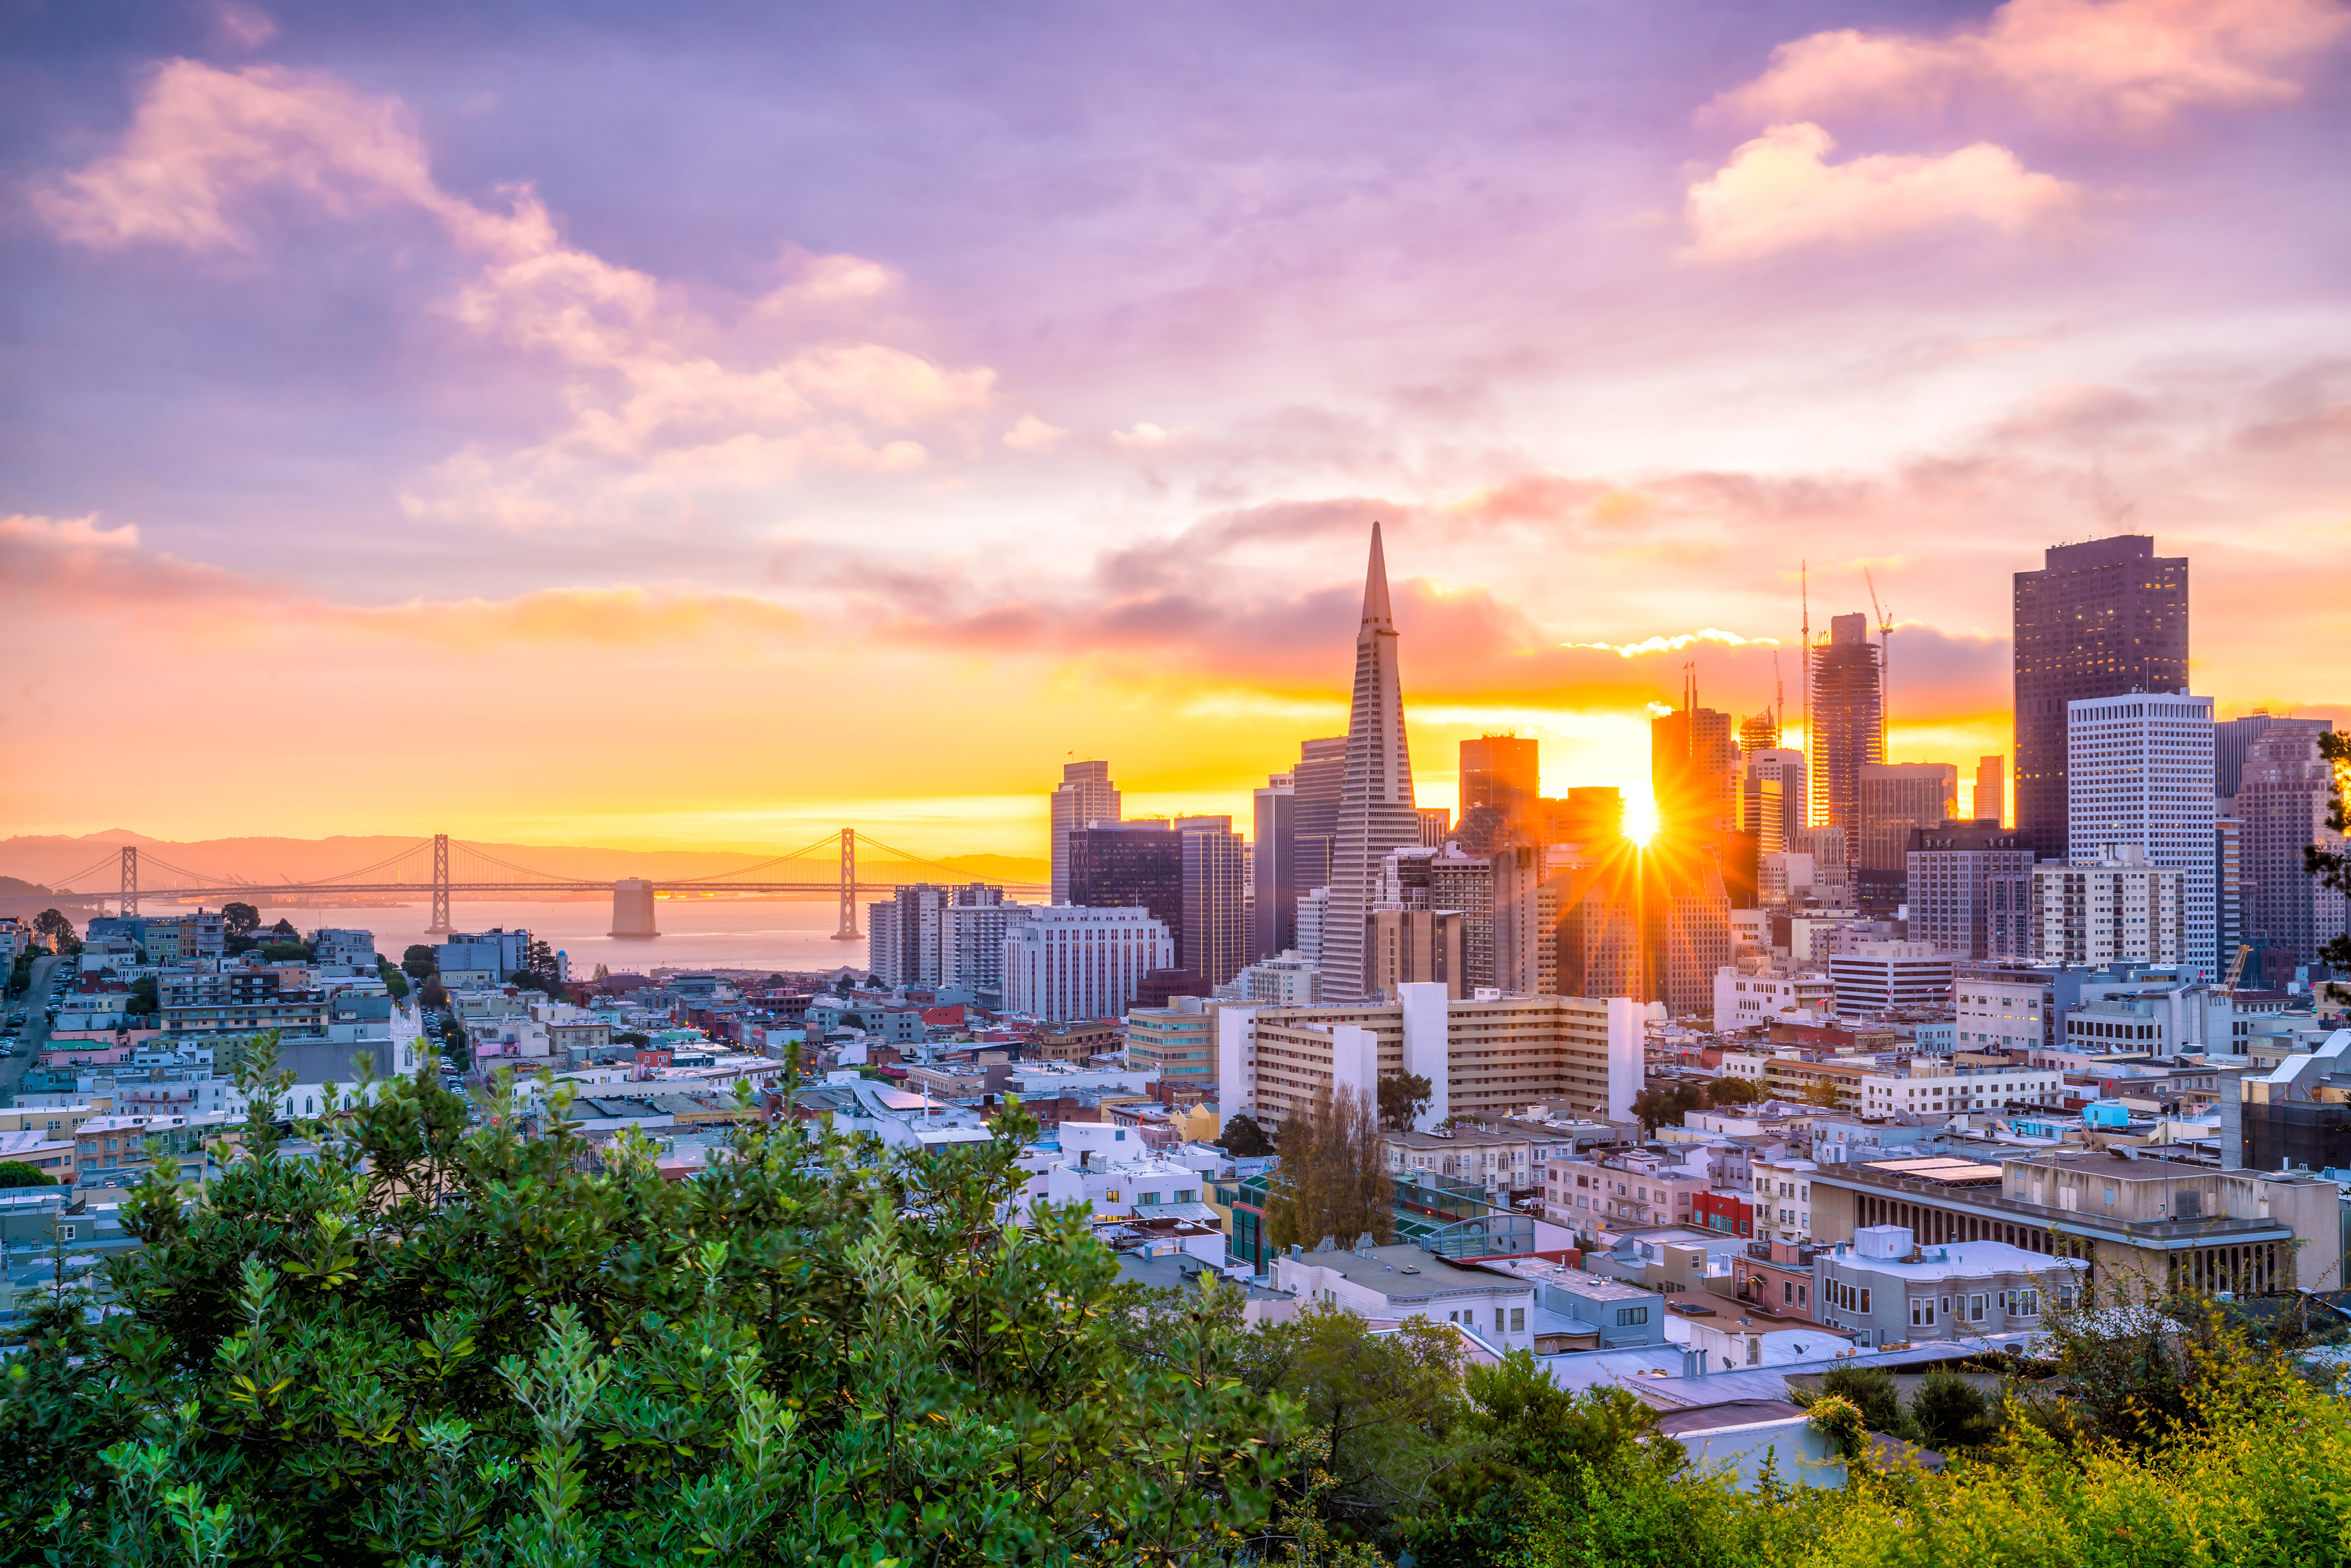 Destination image of San Francisco